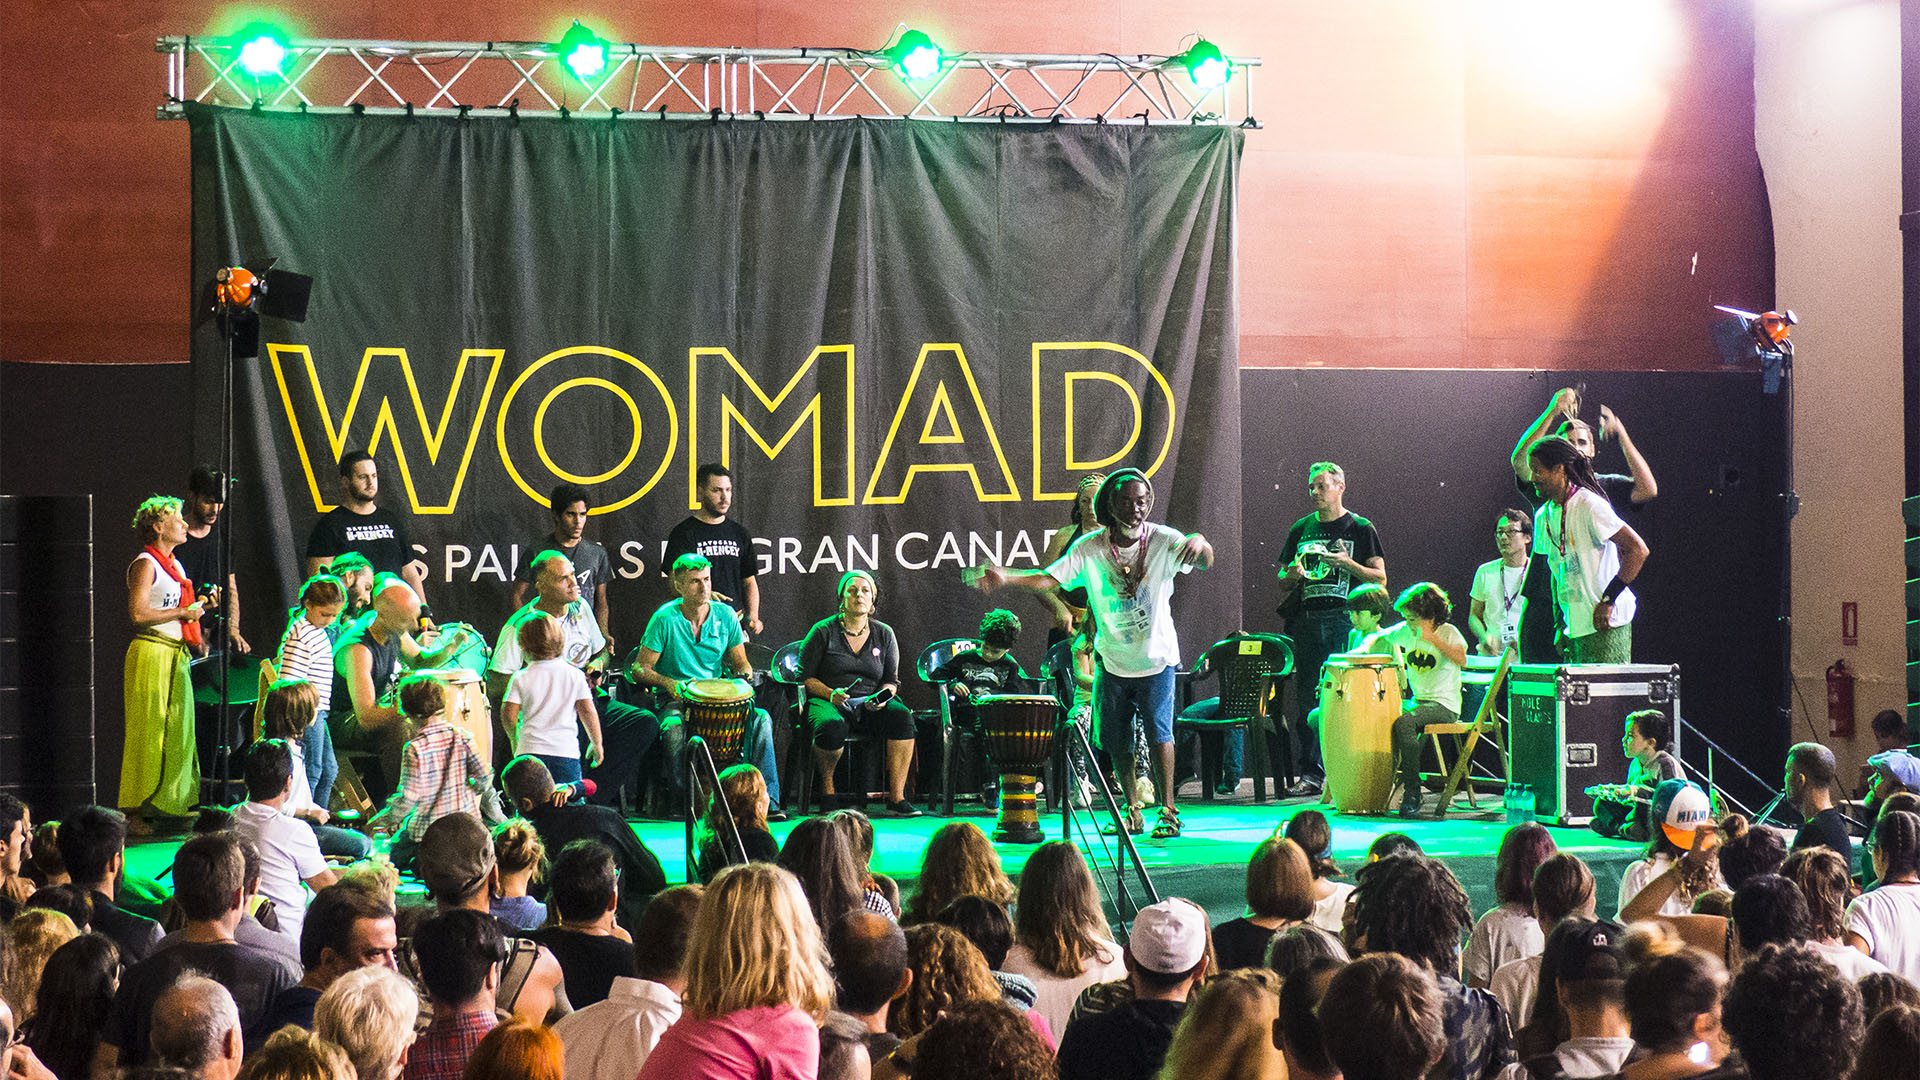 WOMAD Festival 2017 Las Palmas Gran Canaria. On stage: Audience on Stage – WOMAD ist ein Festival zum Mitmachen.